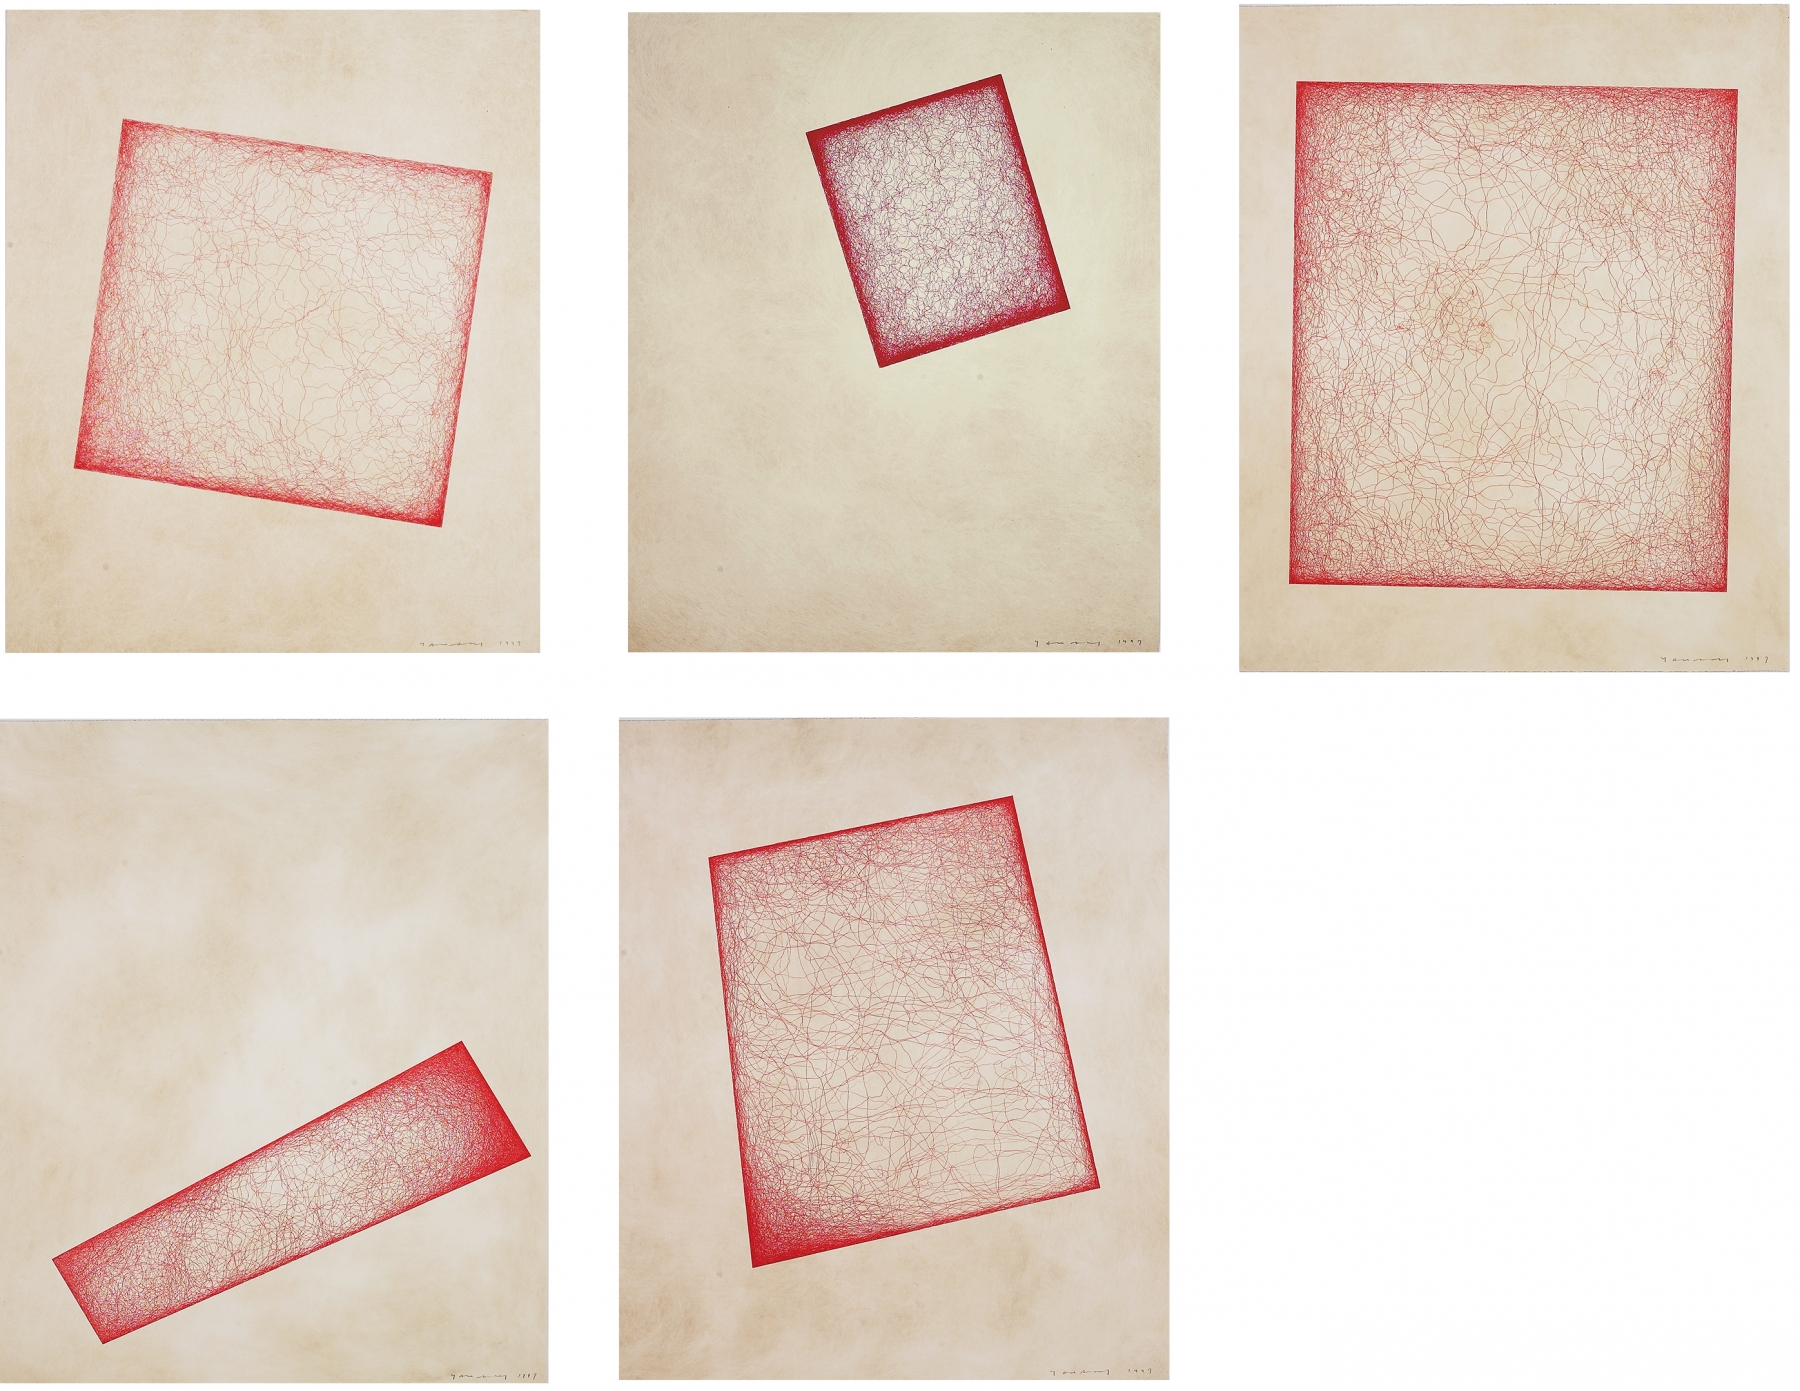 Yukinori Yanagi
Wandering Position,&nbsp;1997
Portfolio of&nbsp;5 line etchings
24 x 20 inches (61.5 x 51 cm), each
Edition of 35 + proofs

Inquire